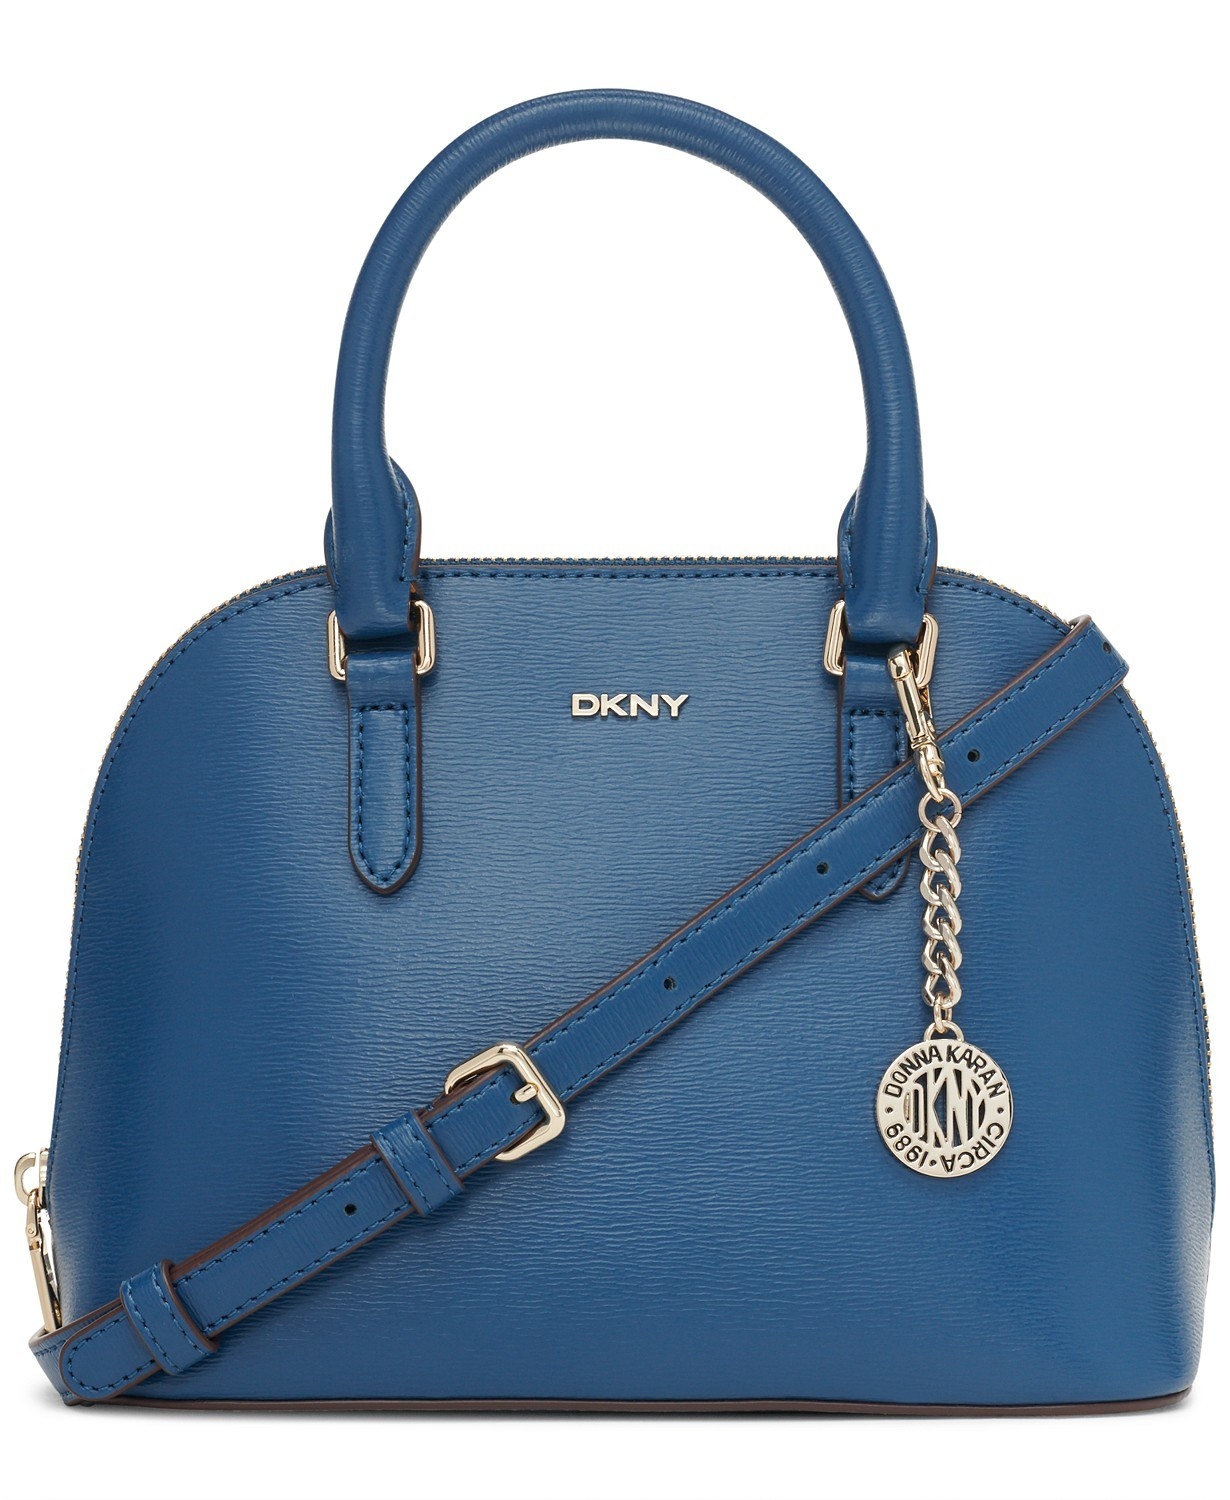 Blue satchel crossbody purse